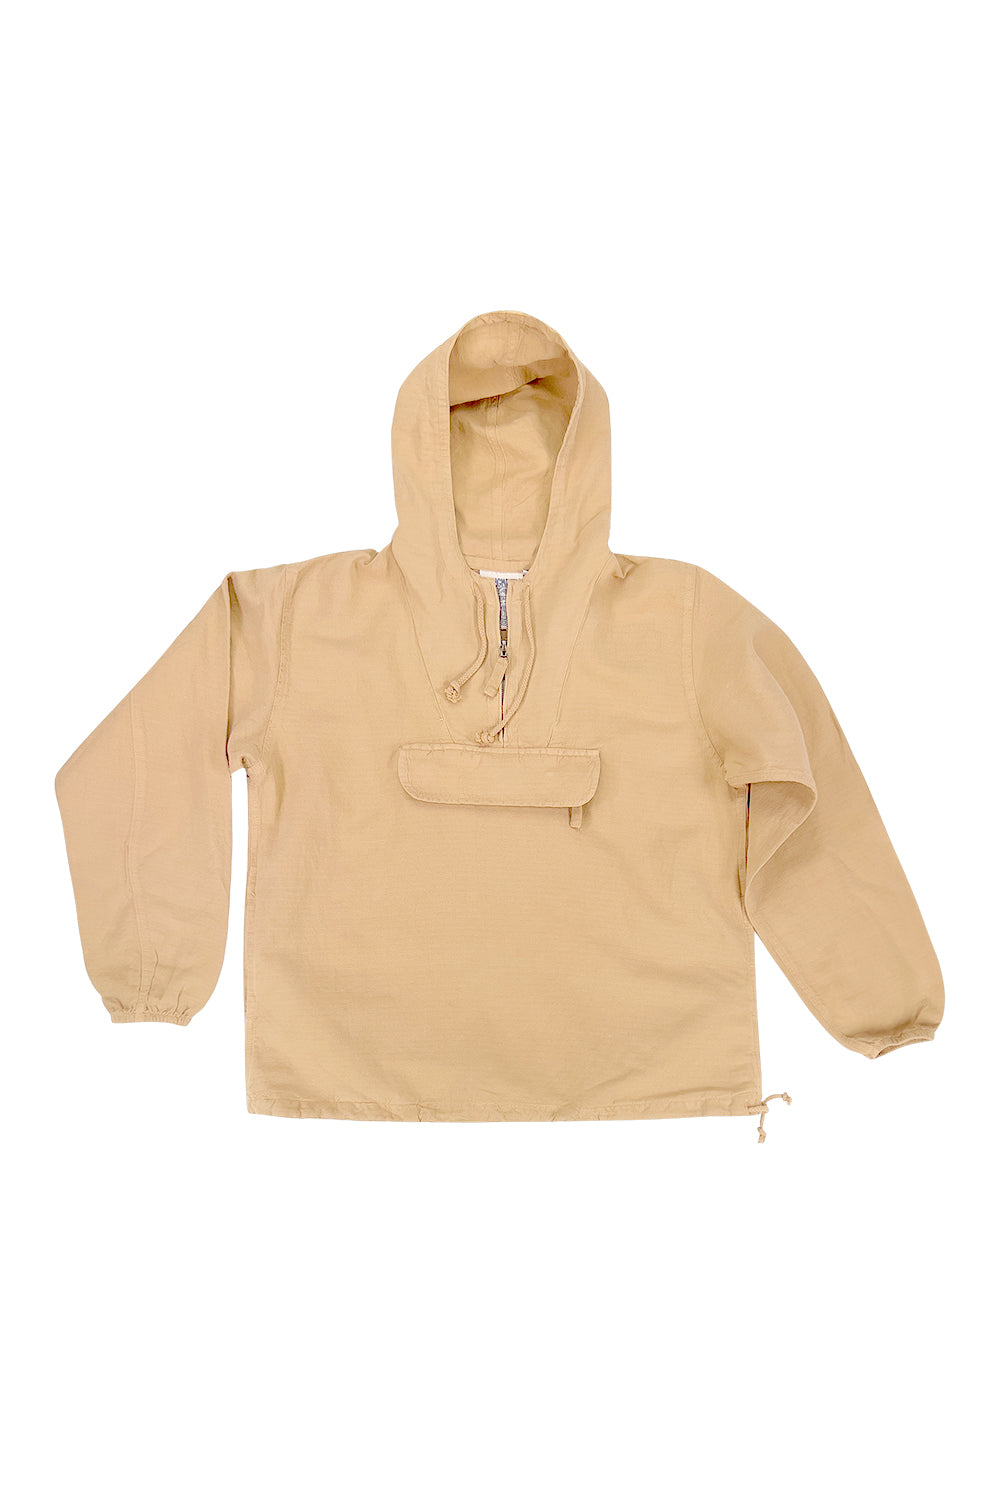 Shoreline Anorak Jacket | Jungmaven Hemp Clothing & Accessories / Color: Oat Milk